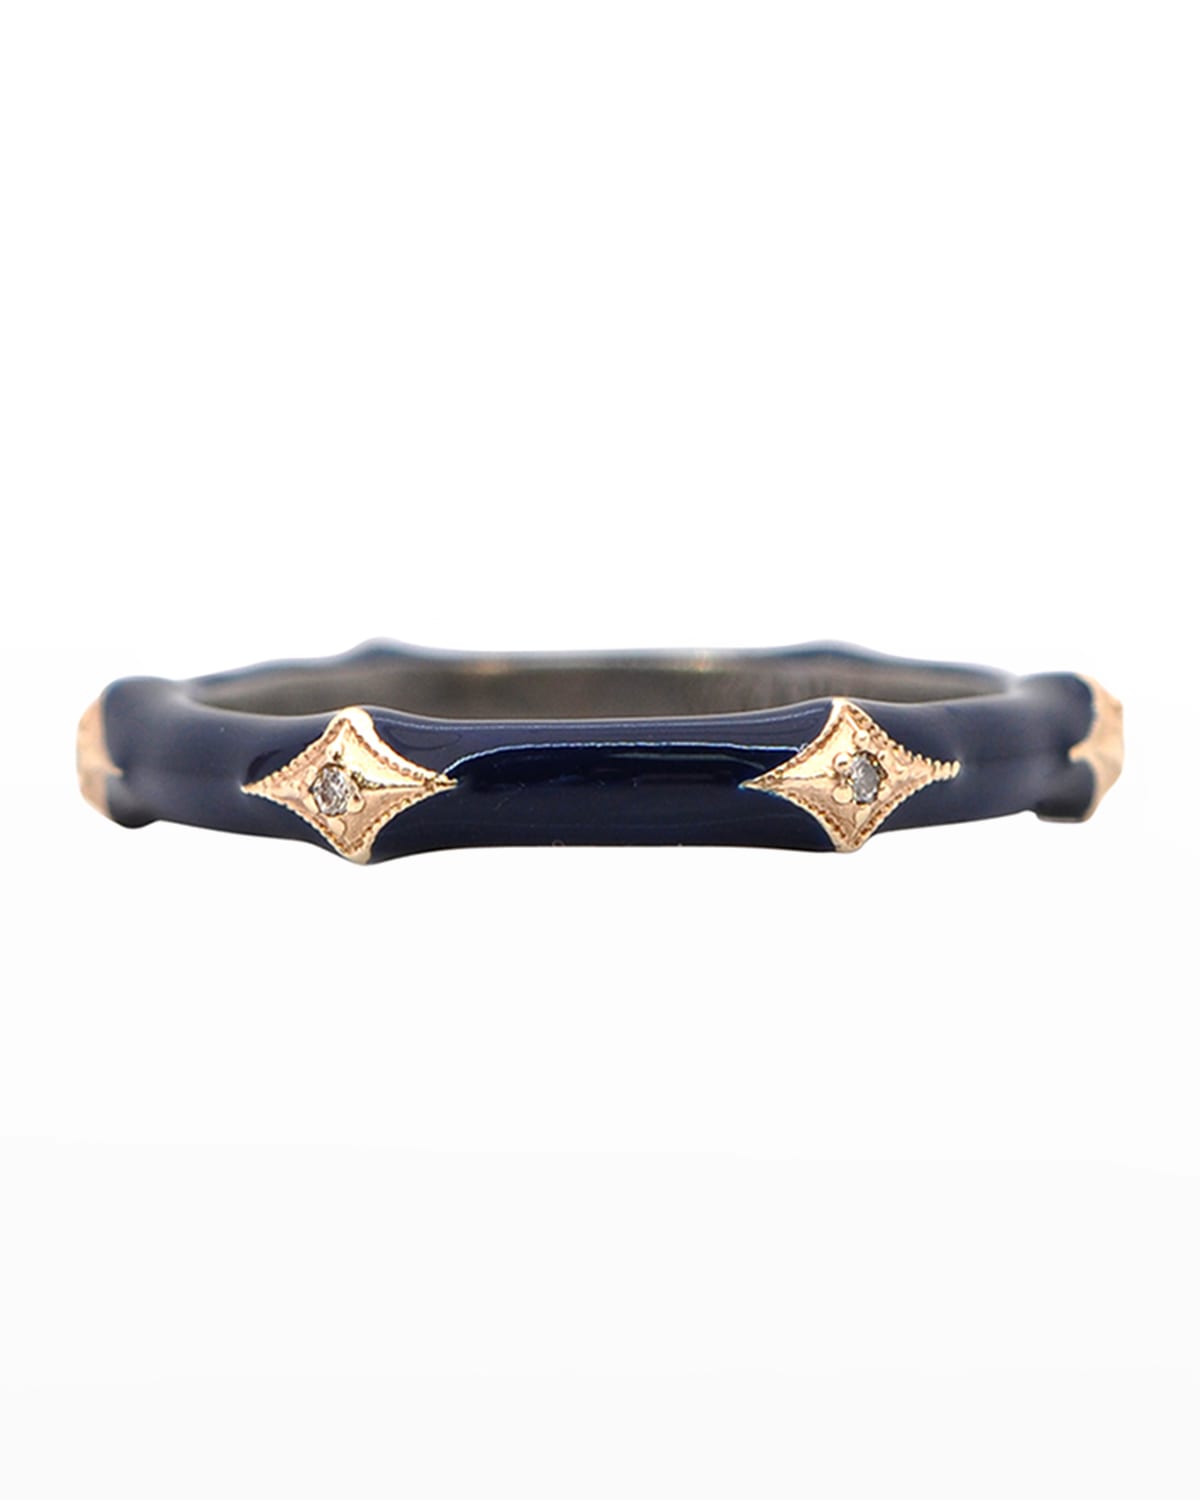 Old World Enamel Ring in Navy Blue, Size 5-8